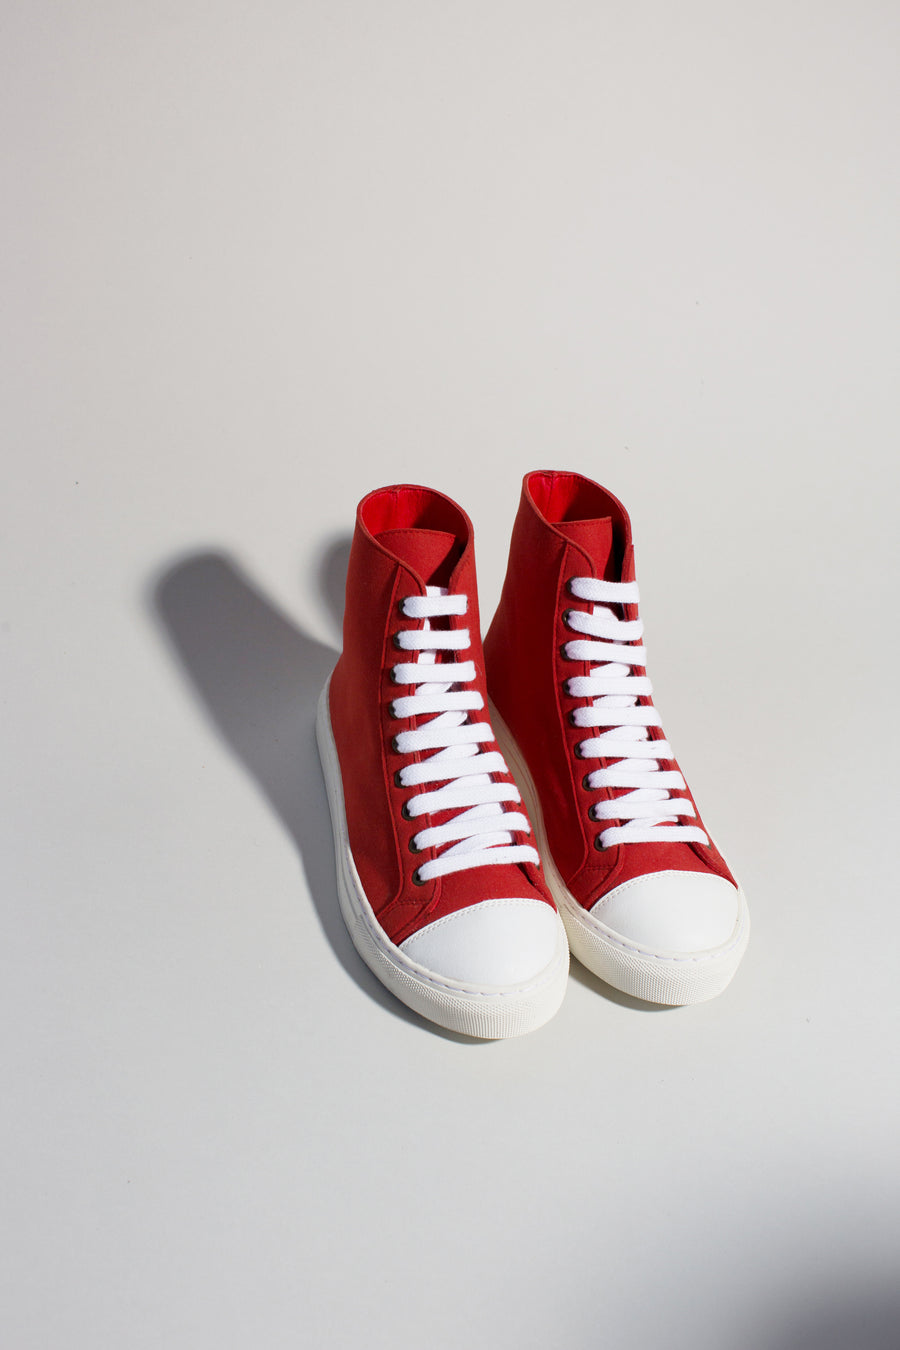 KAMO Red/White sneakers| warehouse sale